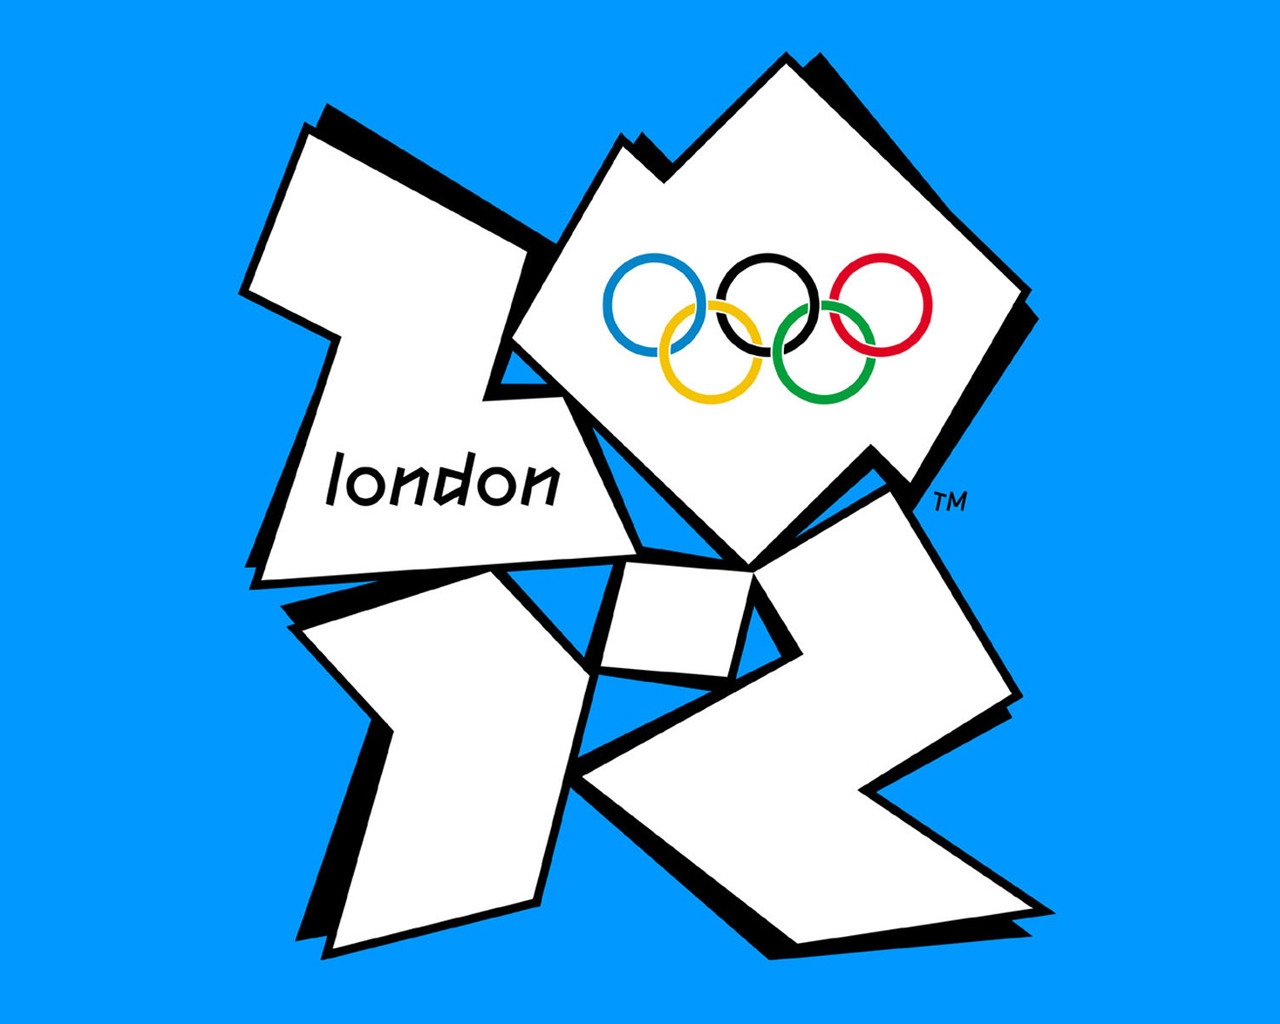 London 2012 Olympics Logo for 1280 x 1024 resolution